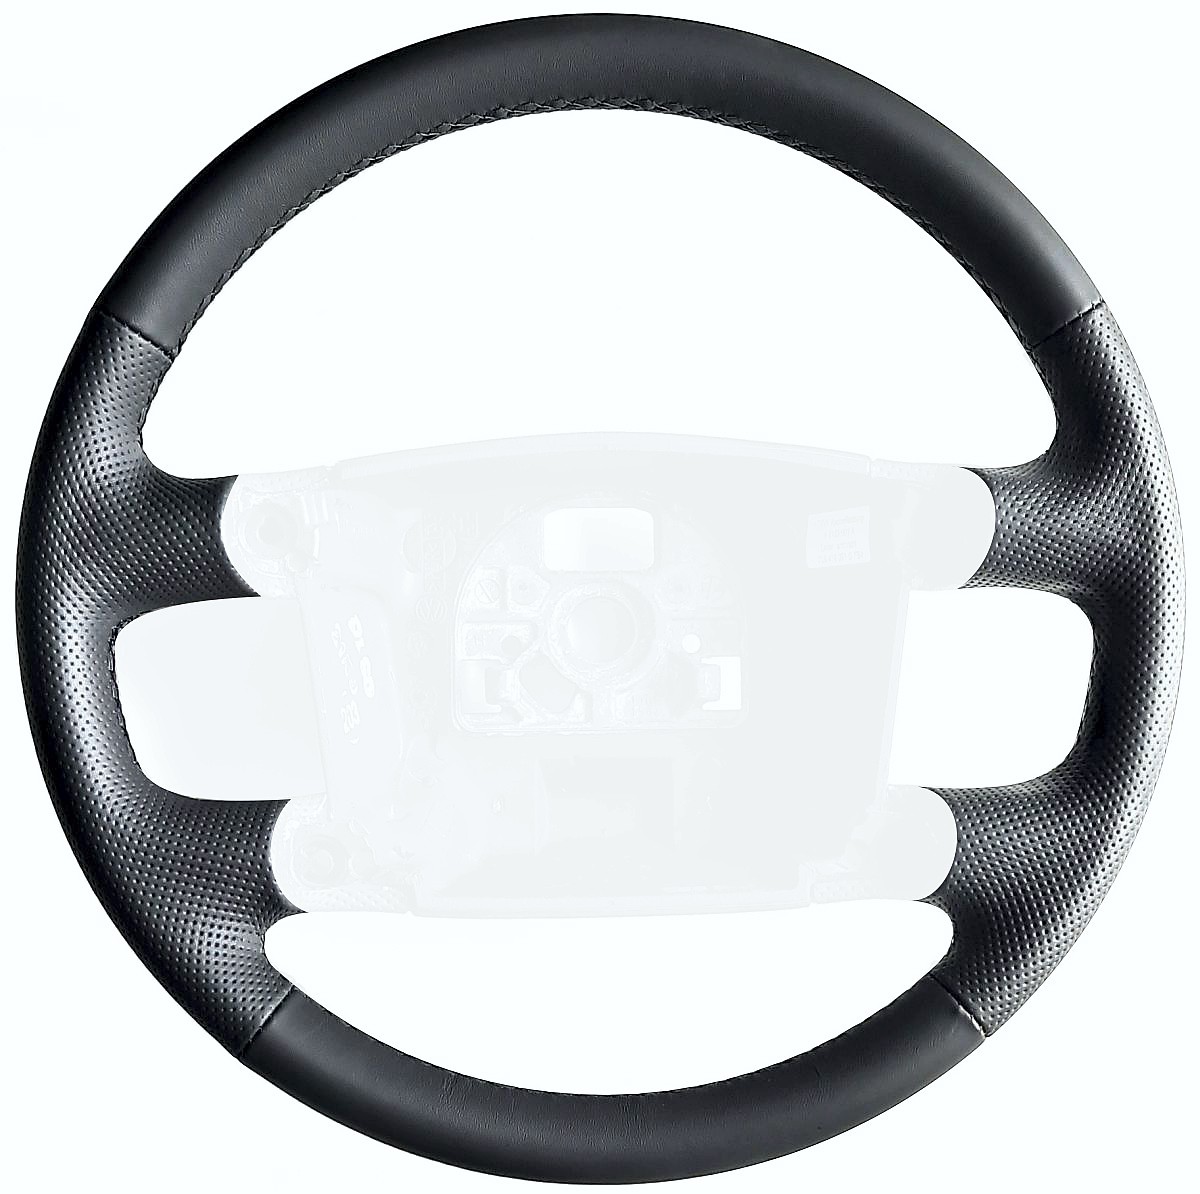 2003-10 Volkswagen Touareg steering wheel cover